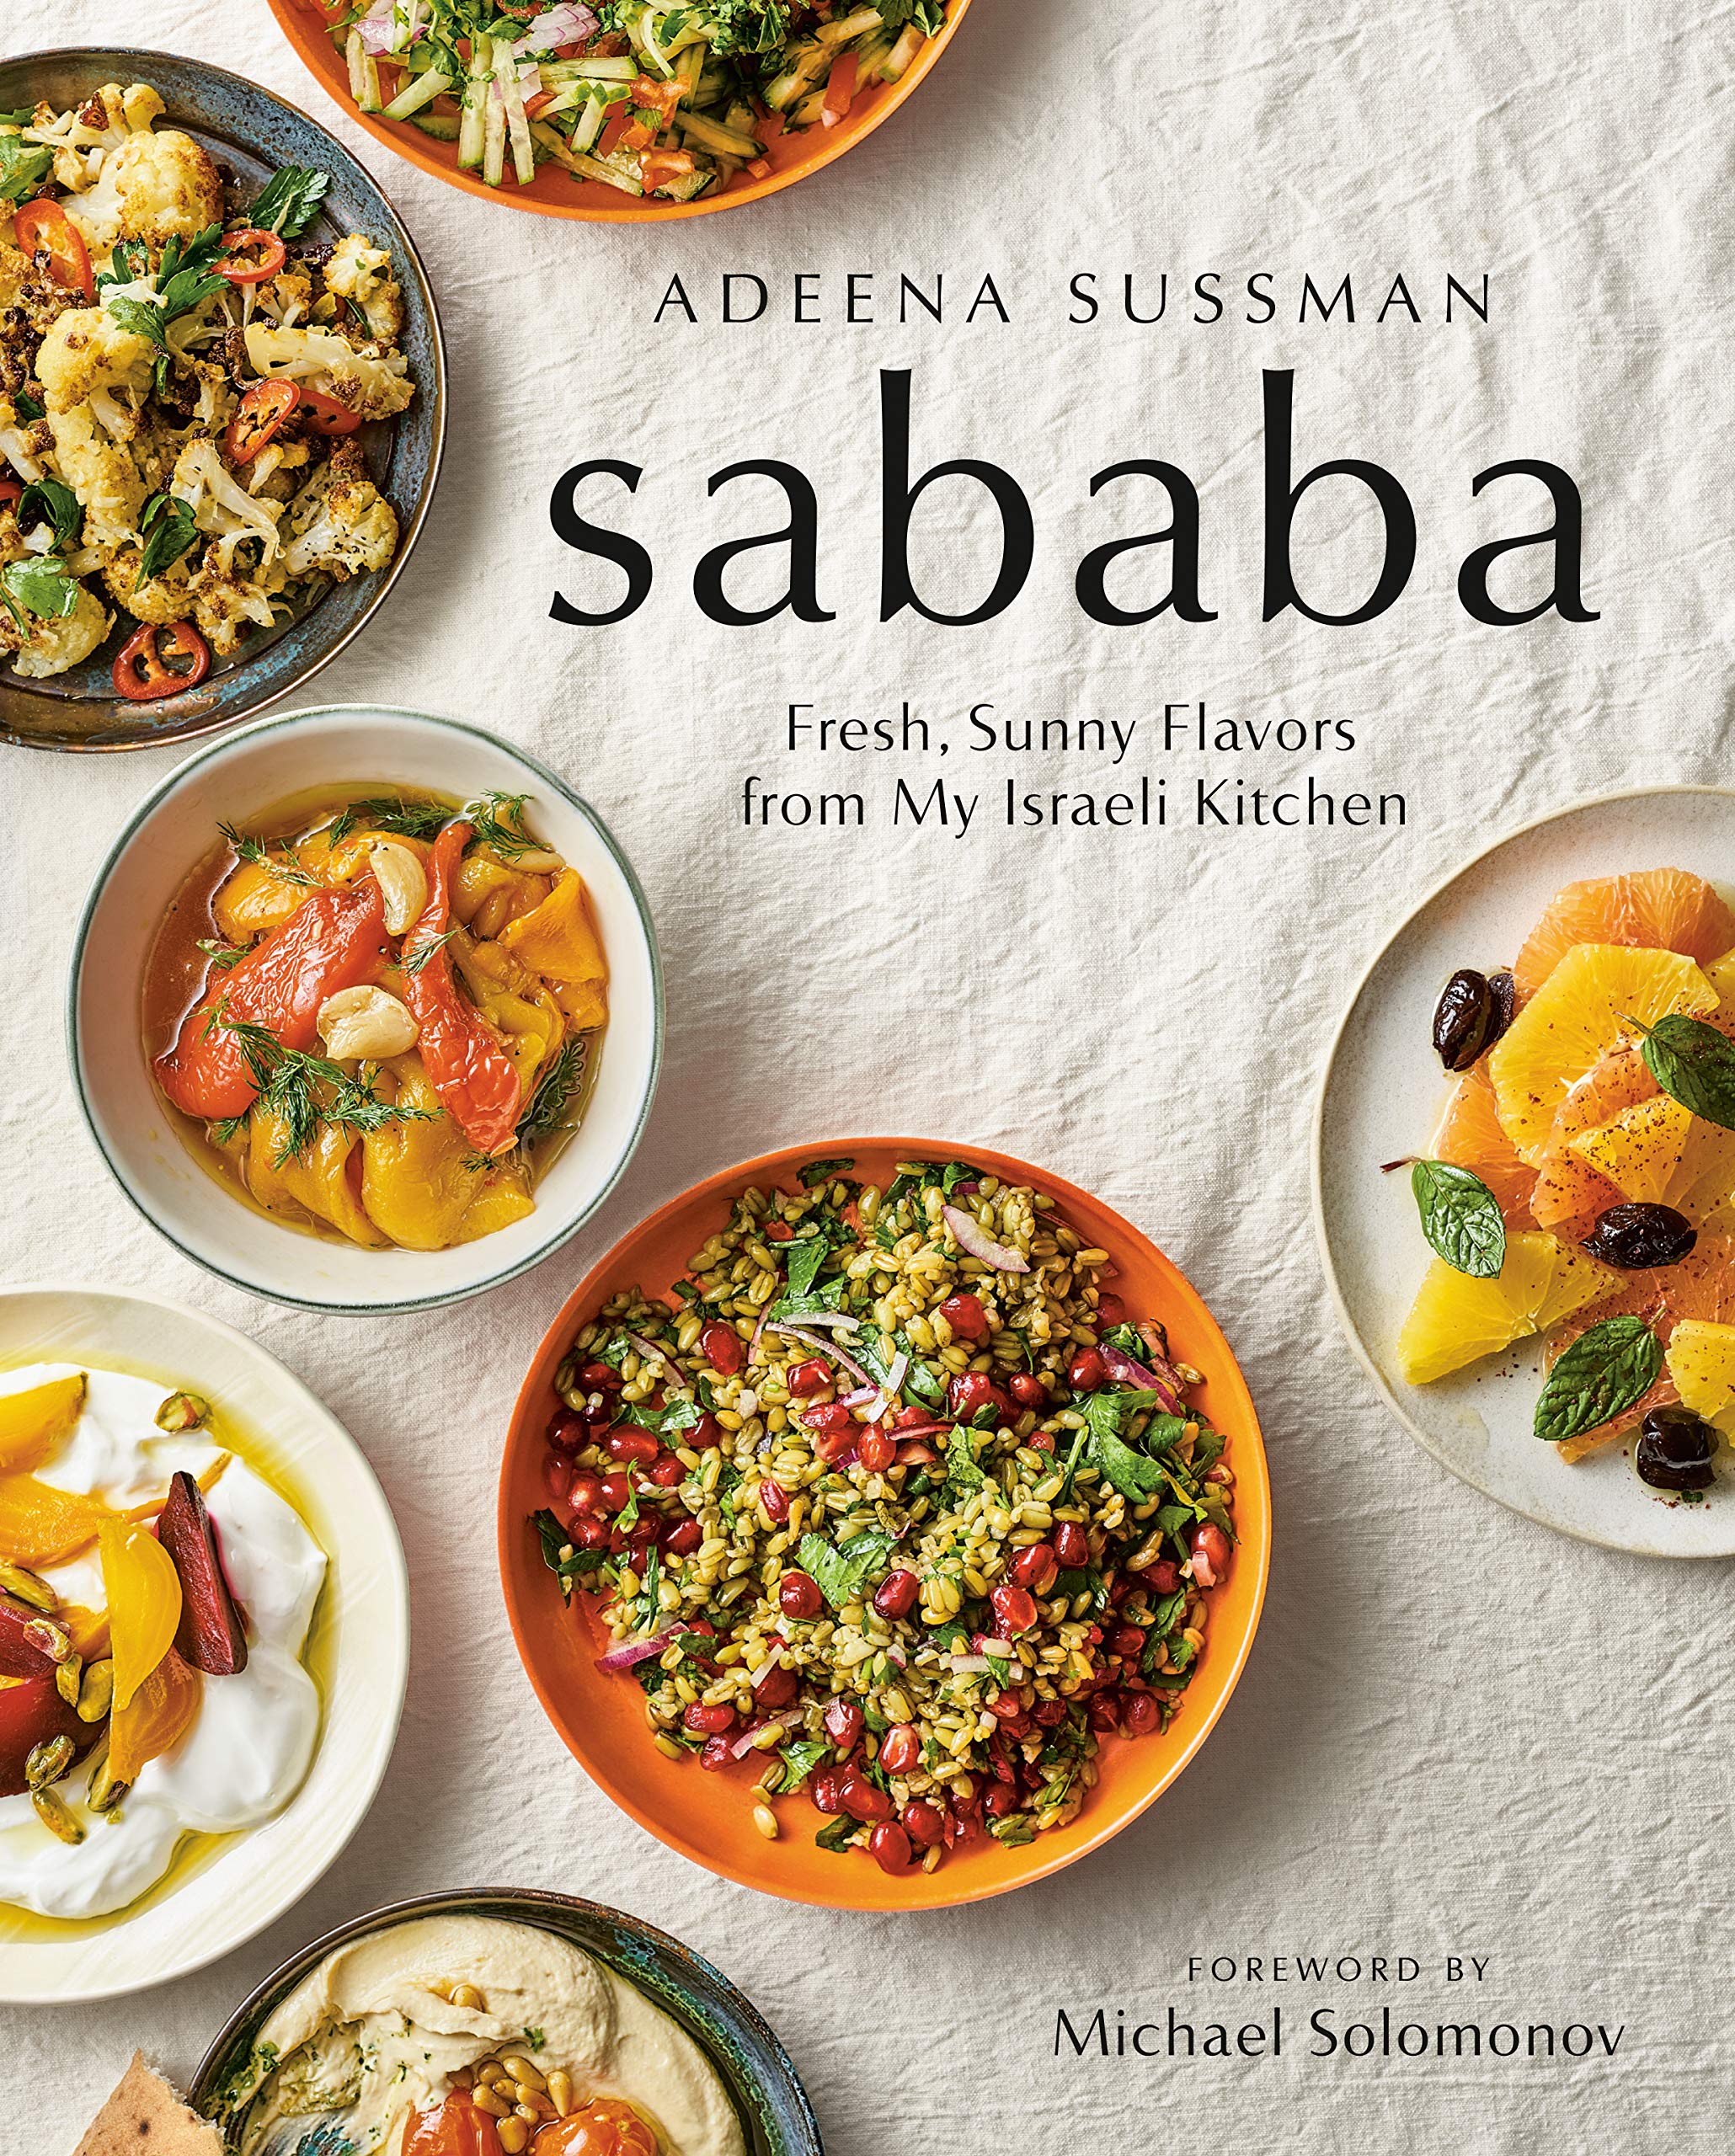 Sababa: Fresh, Sunny Flavors From My Israeli Kitchen (Adeena Sussman) *Signed*